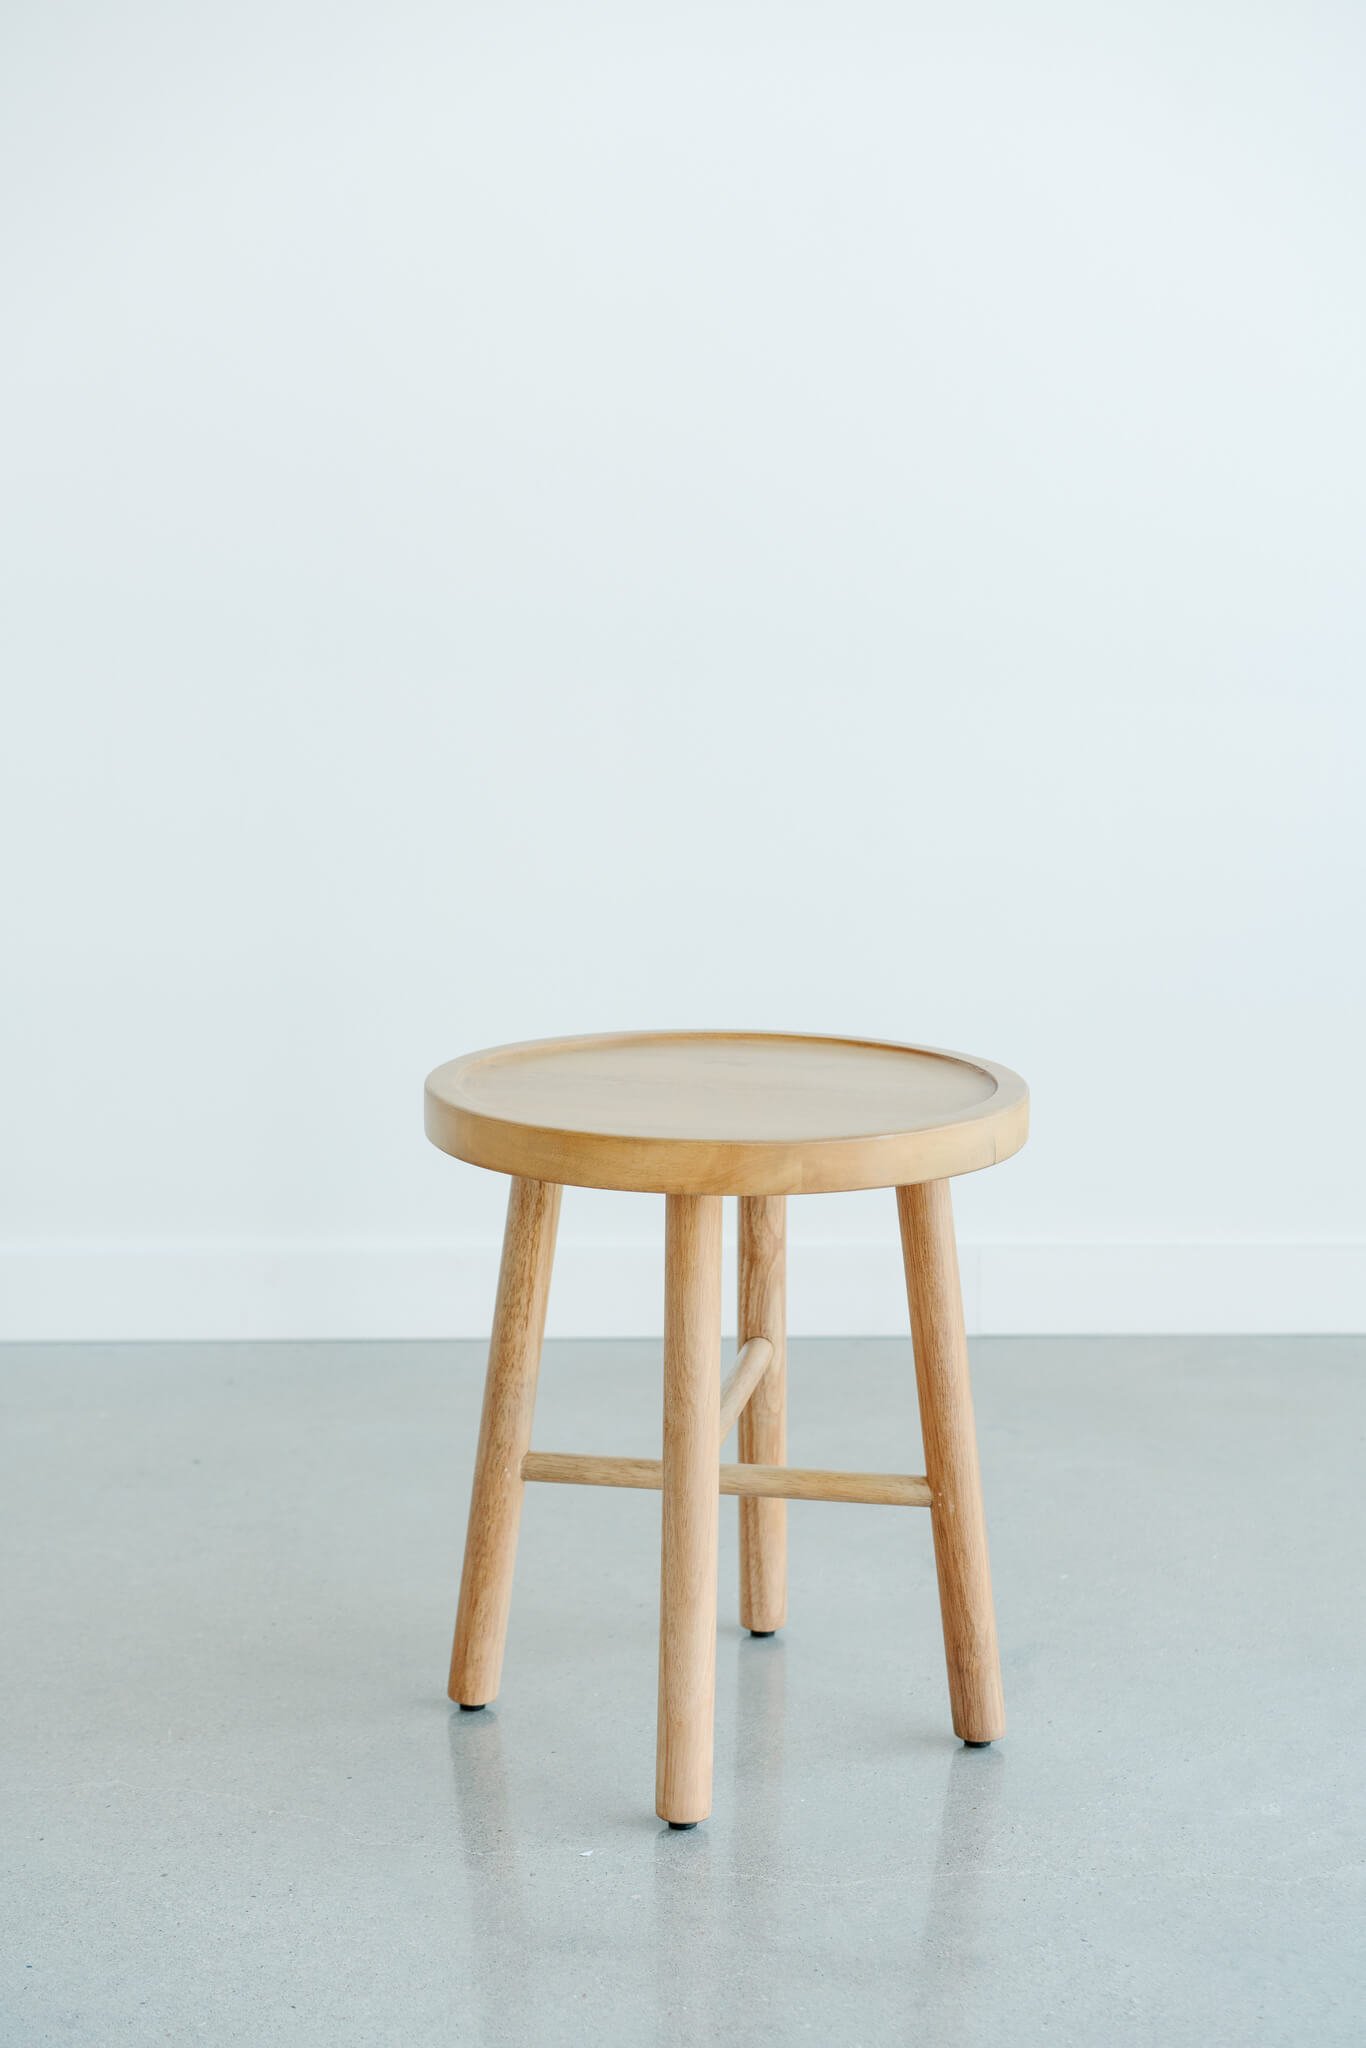 small-stool-rental-studio-austin.jpg